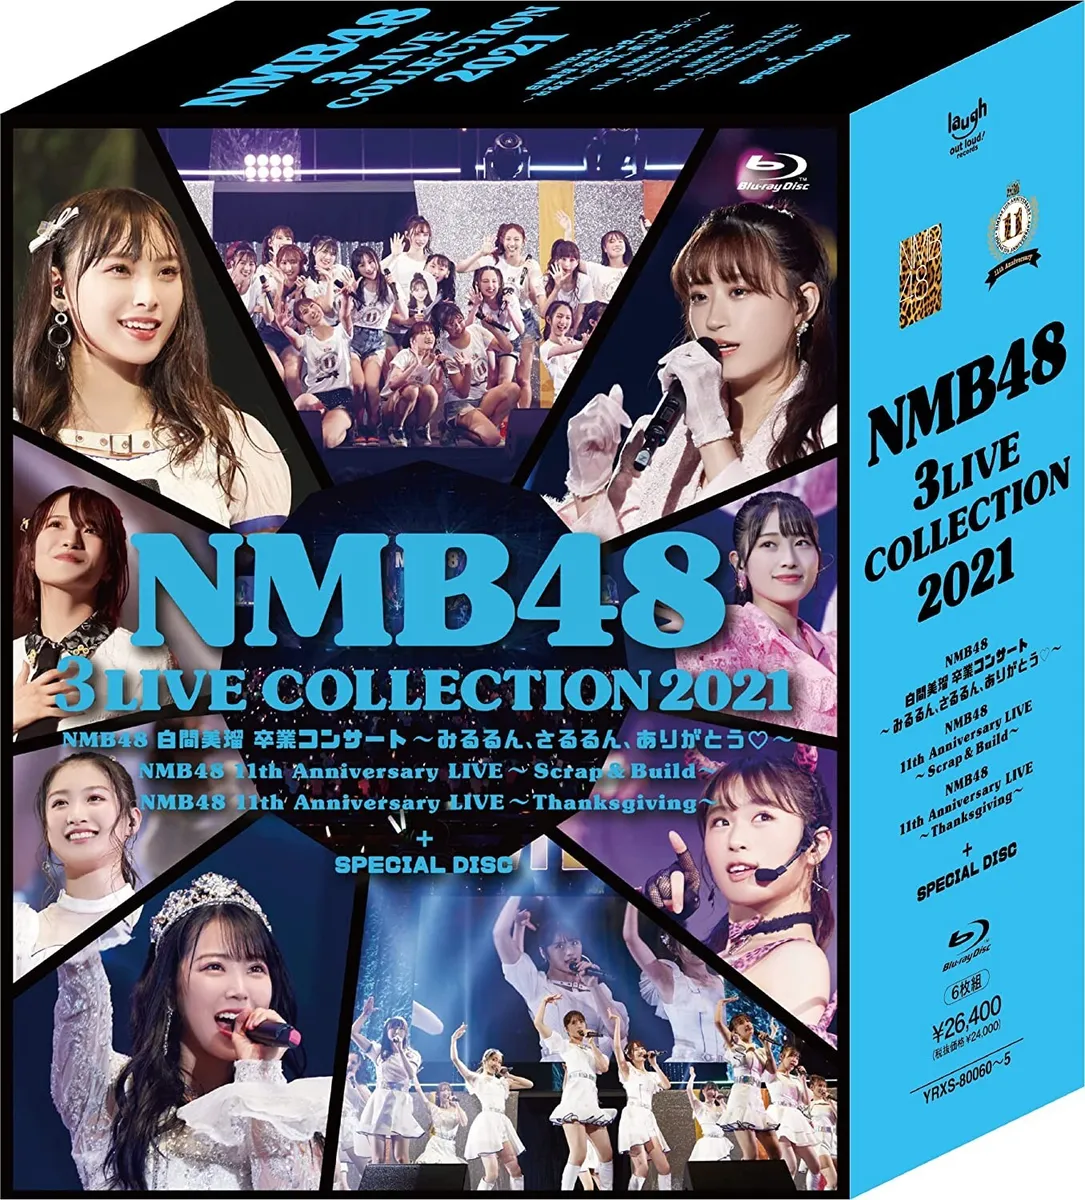 New NMB48 3 LIVE COLLECTION 2021 6 Blu-ray Japan YRXS-800604571487591191